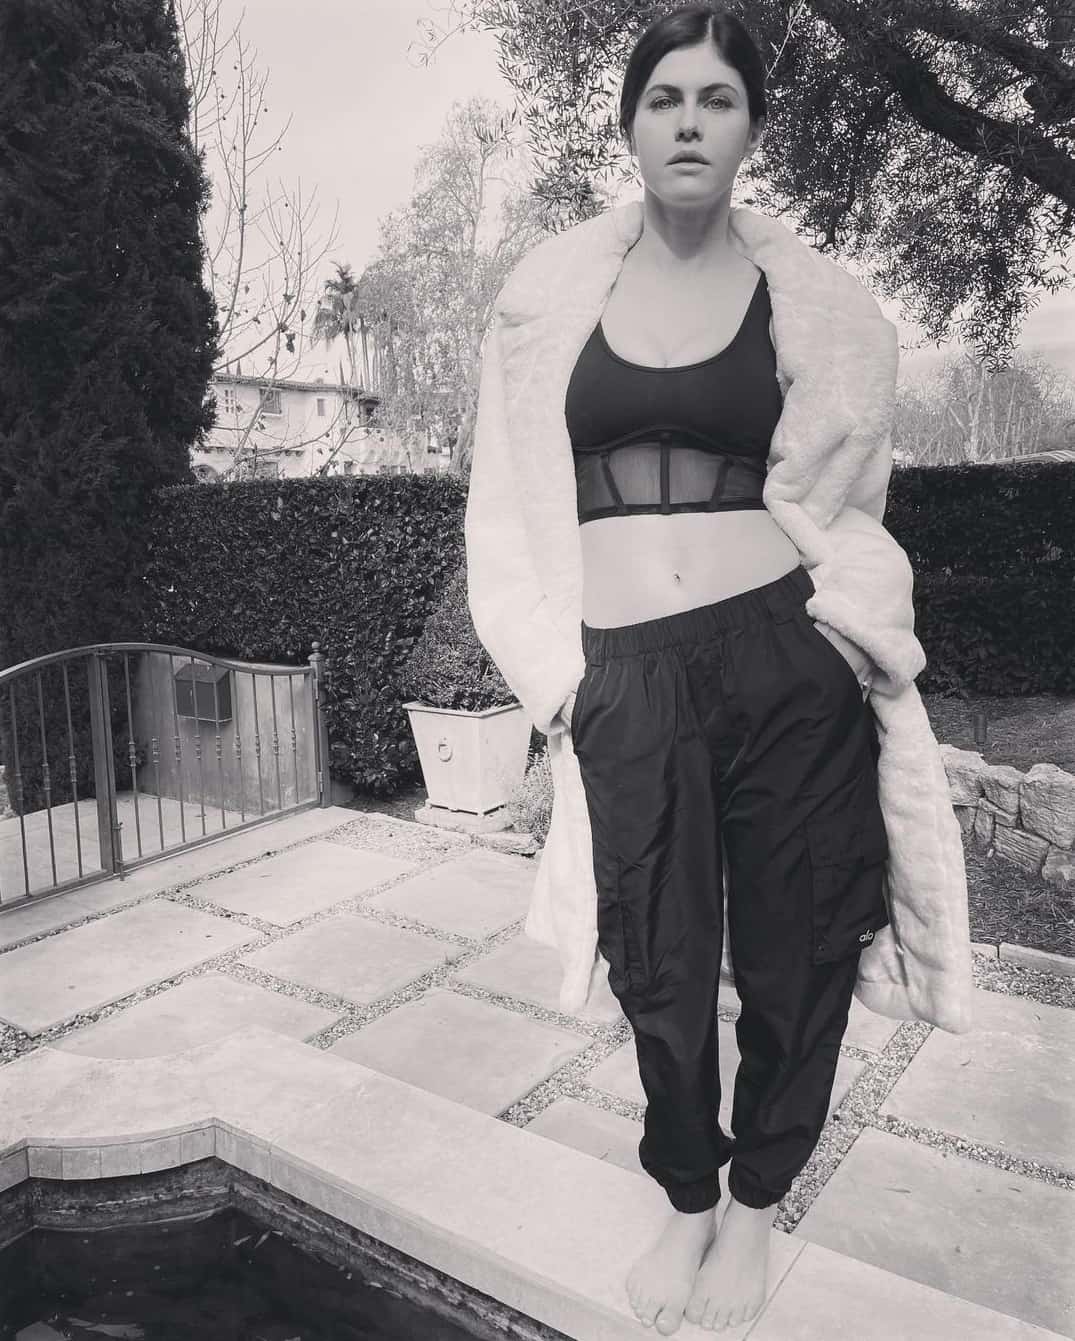 Alexandra Daddario Posing in a Chic “Alo Yoga” Outfit in her Backyard in LA